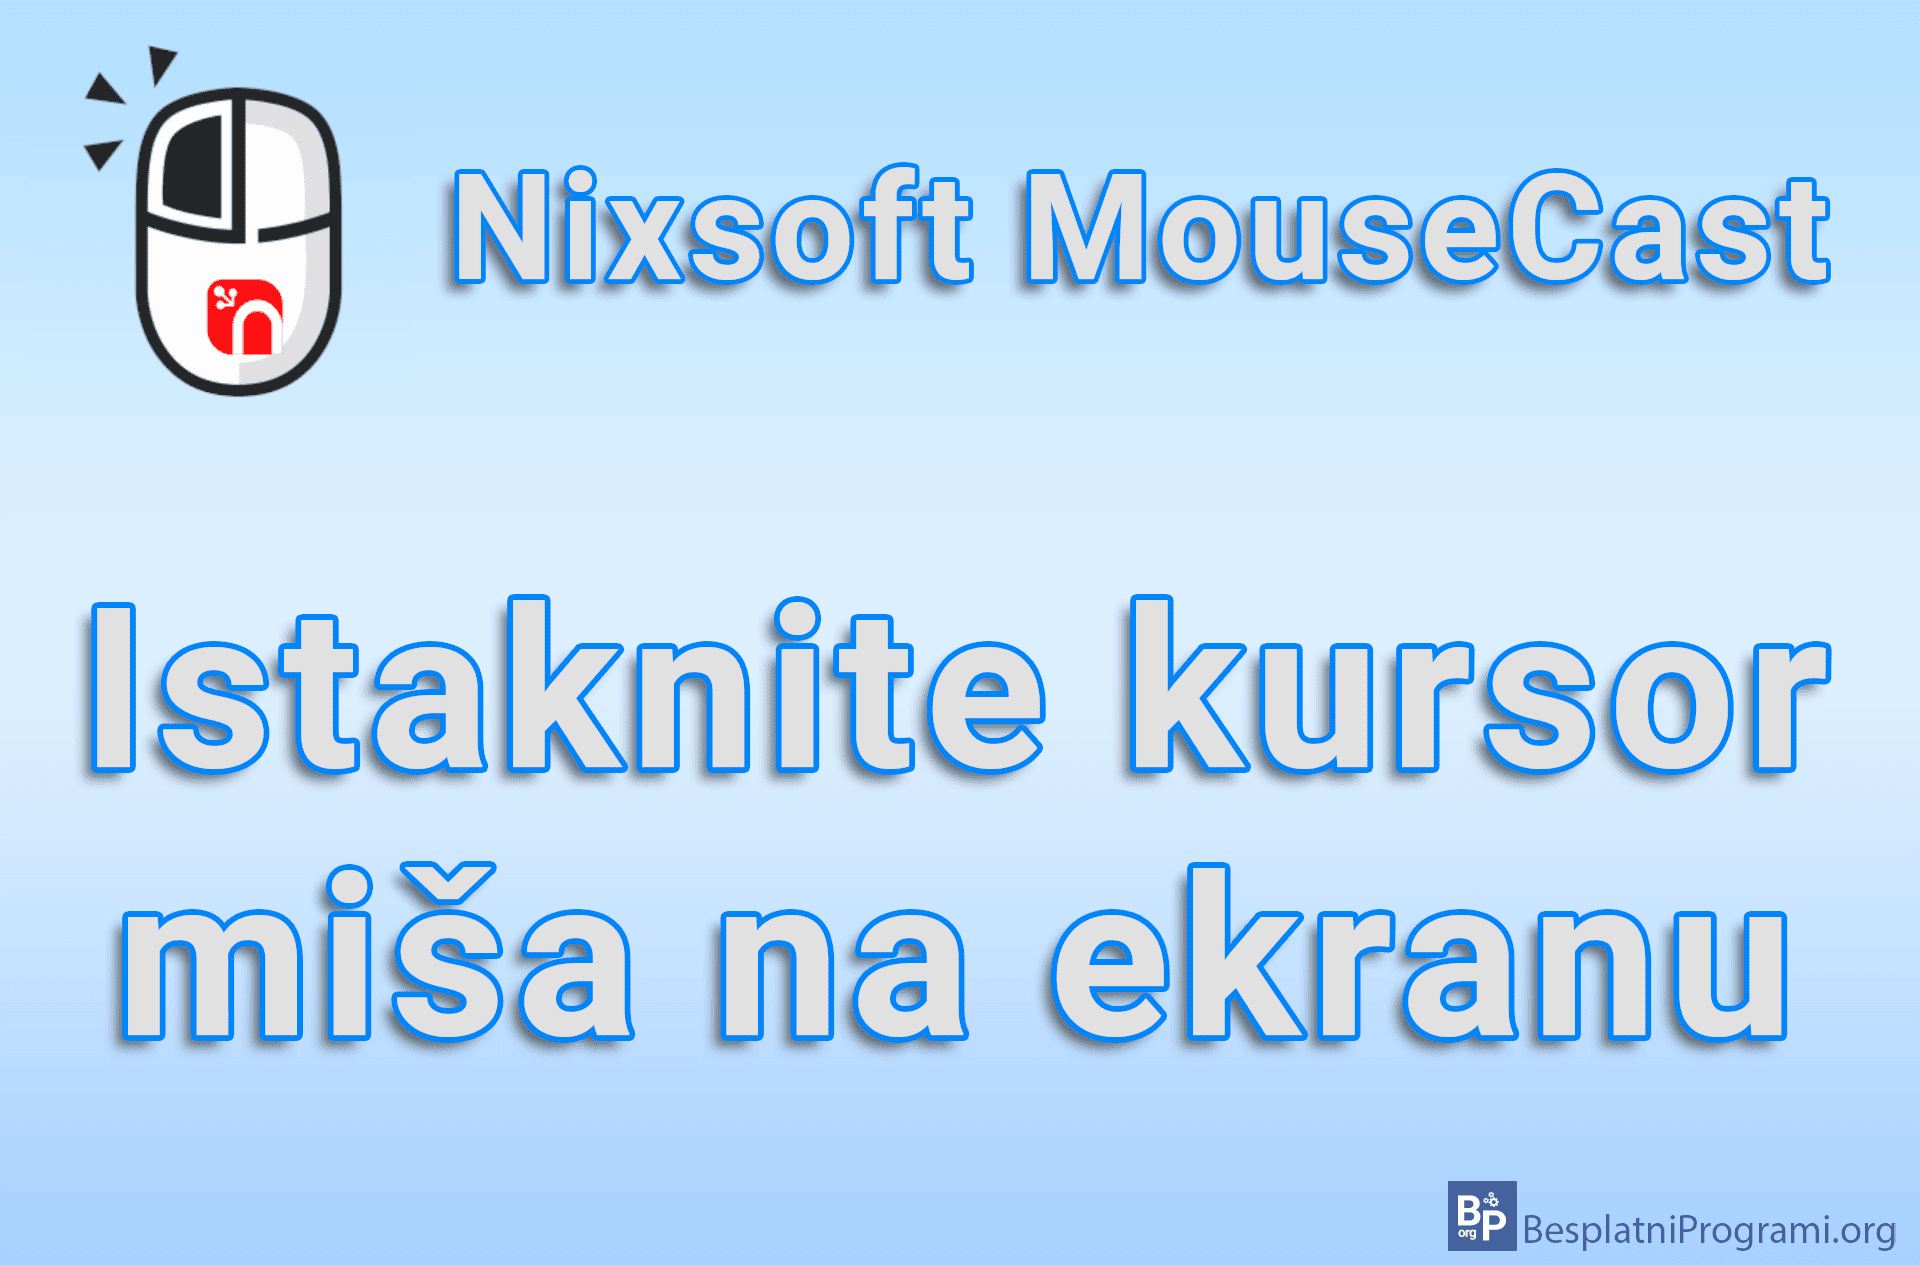 Nixsoft MouseCast - Istaknite kursor miša na ekranu